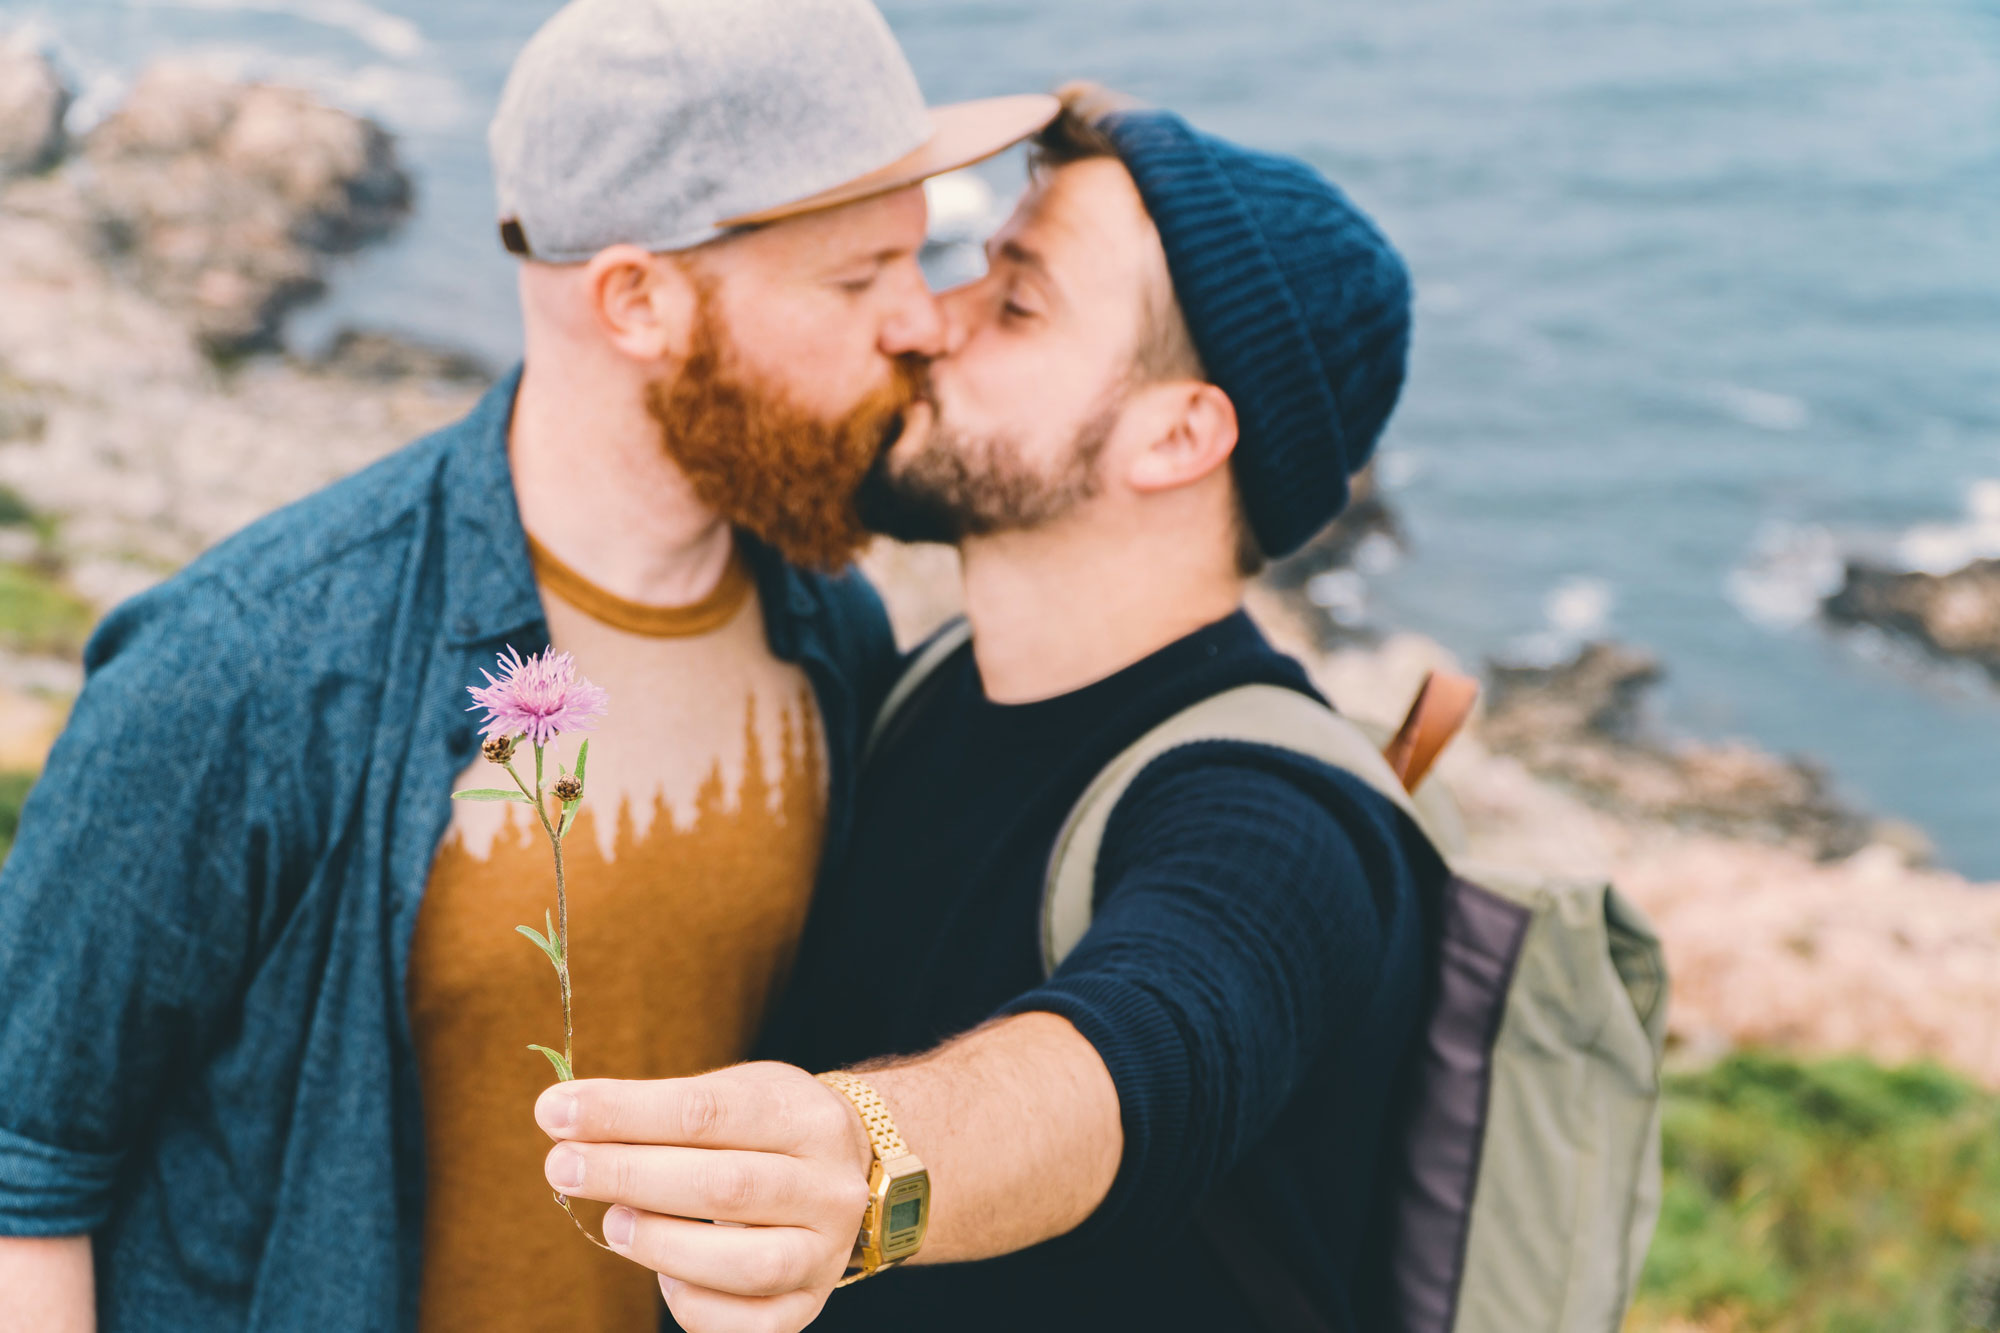 popular gay dating apps sweden